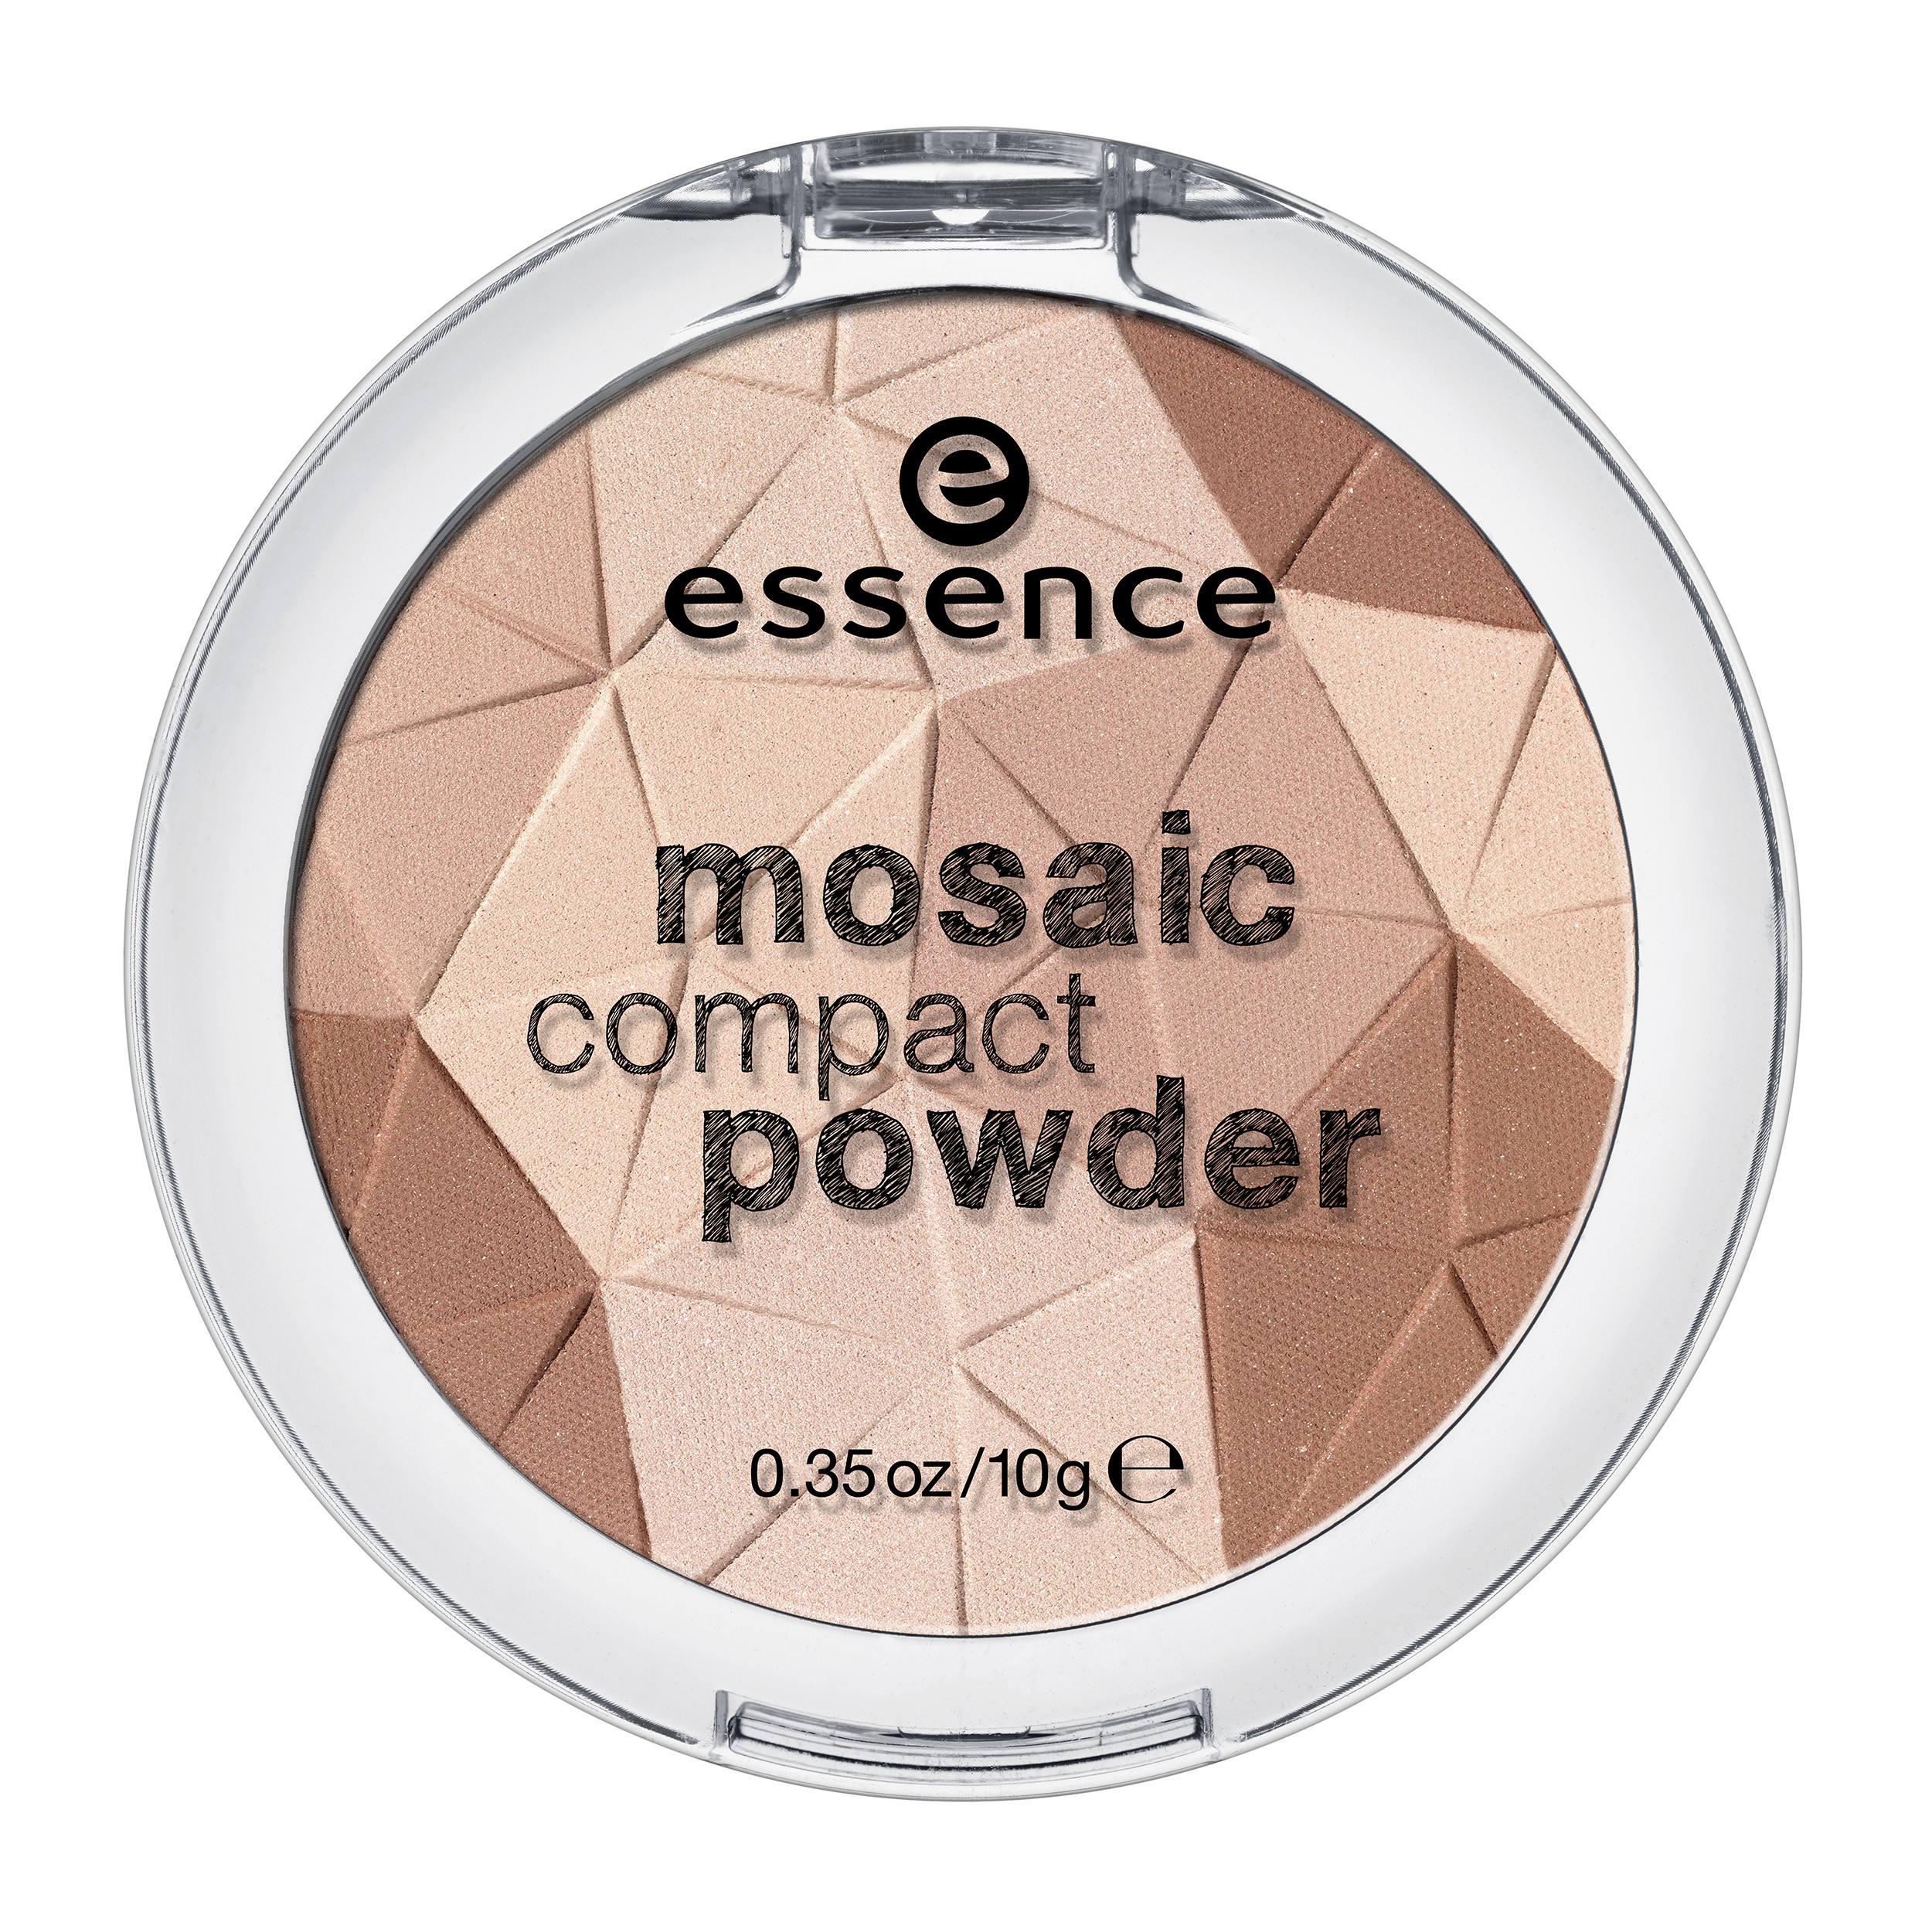 Poudre - Mosaic Compact Powder